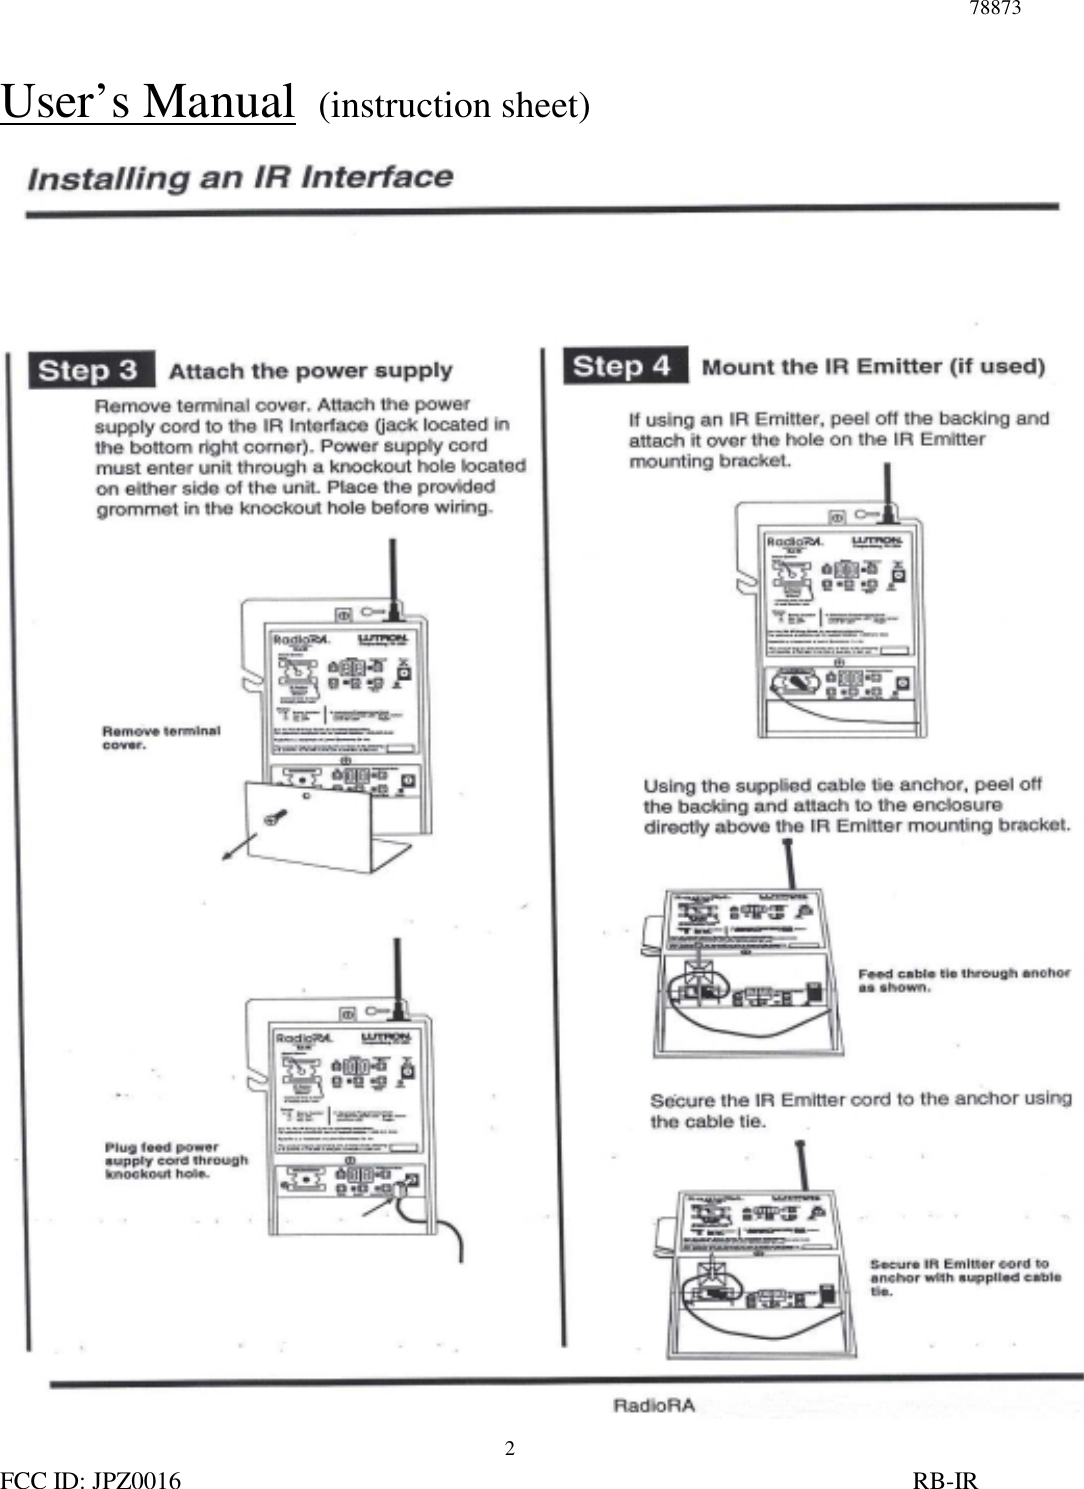 78873FCC ID: JPZ0016                                                                                                                     RB-IR2User’s Manual  (instruction sheet)